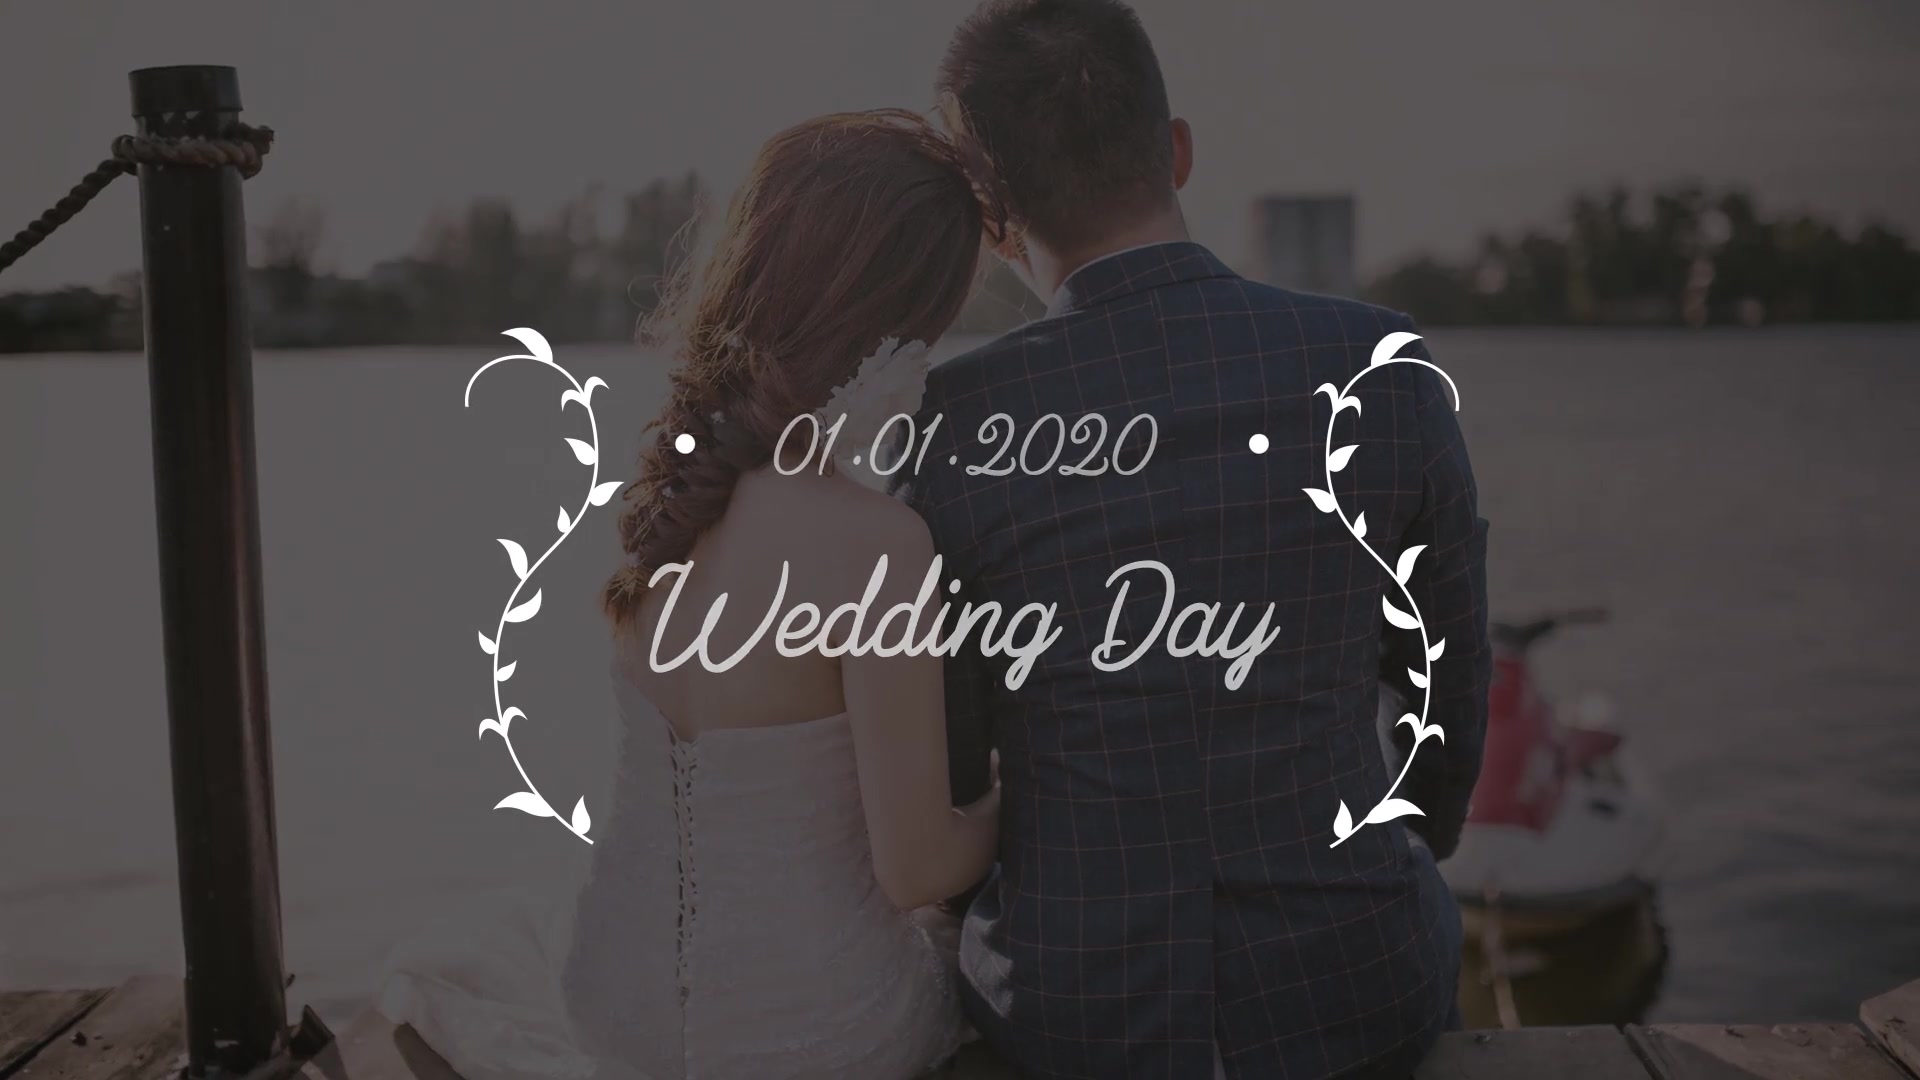 Wedding Titles | DaVinci Resolve Videohive 36709904 DaVinci Resolve Image 12